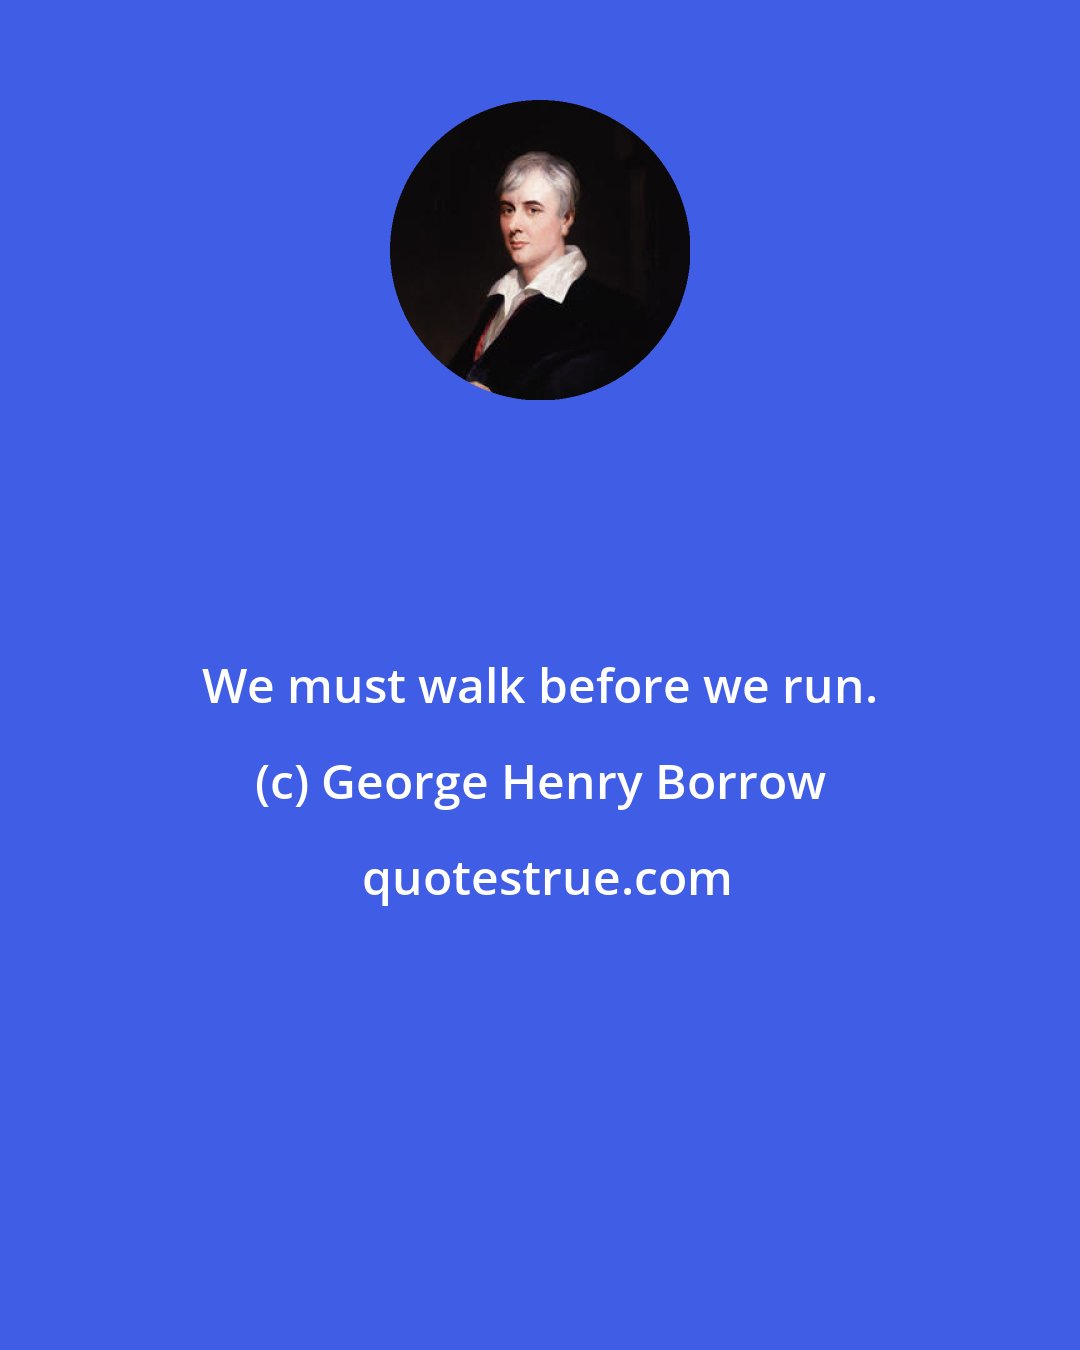 George Henry Borrow: We must walk before we run.